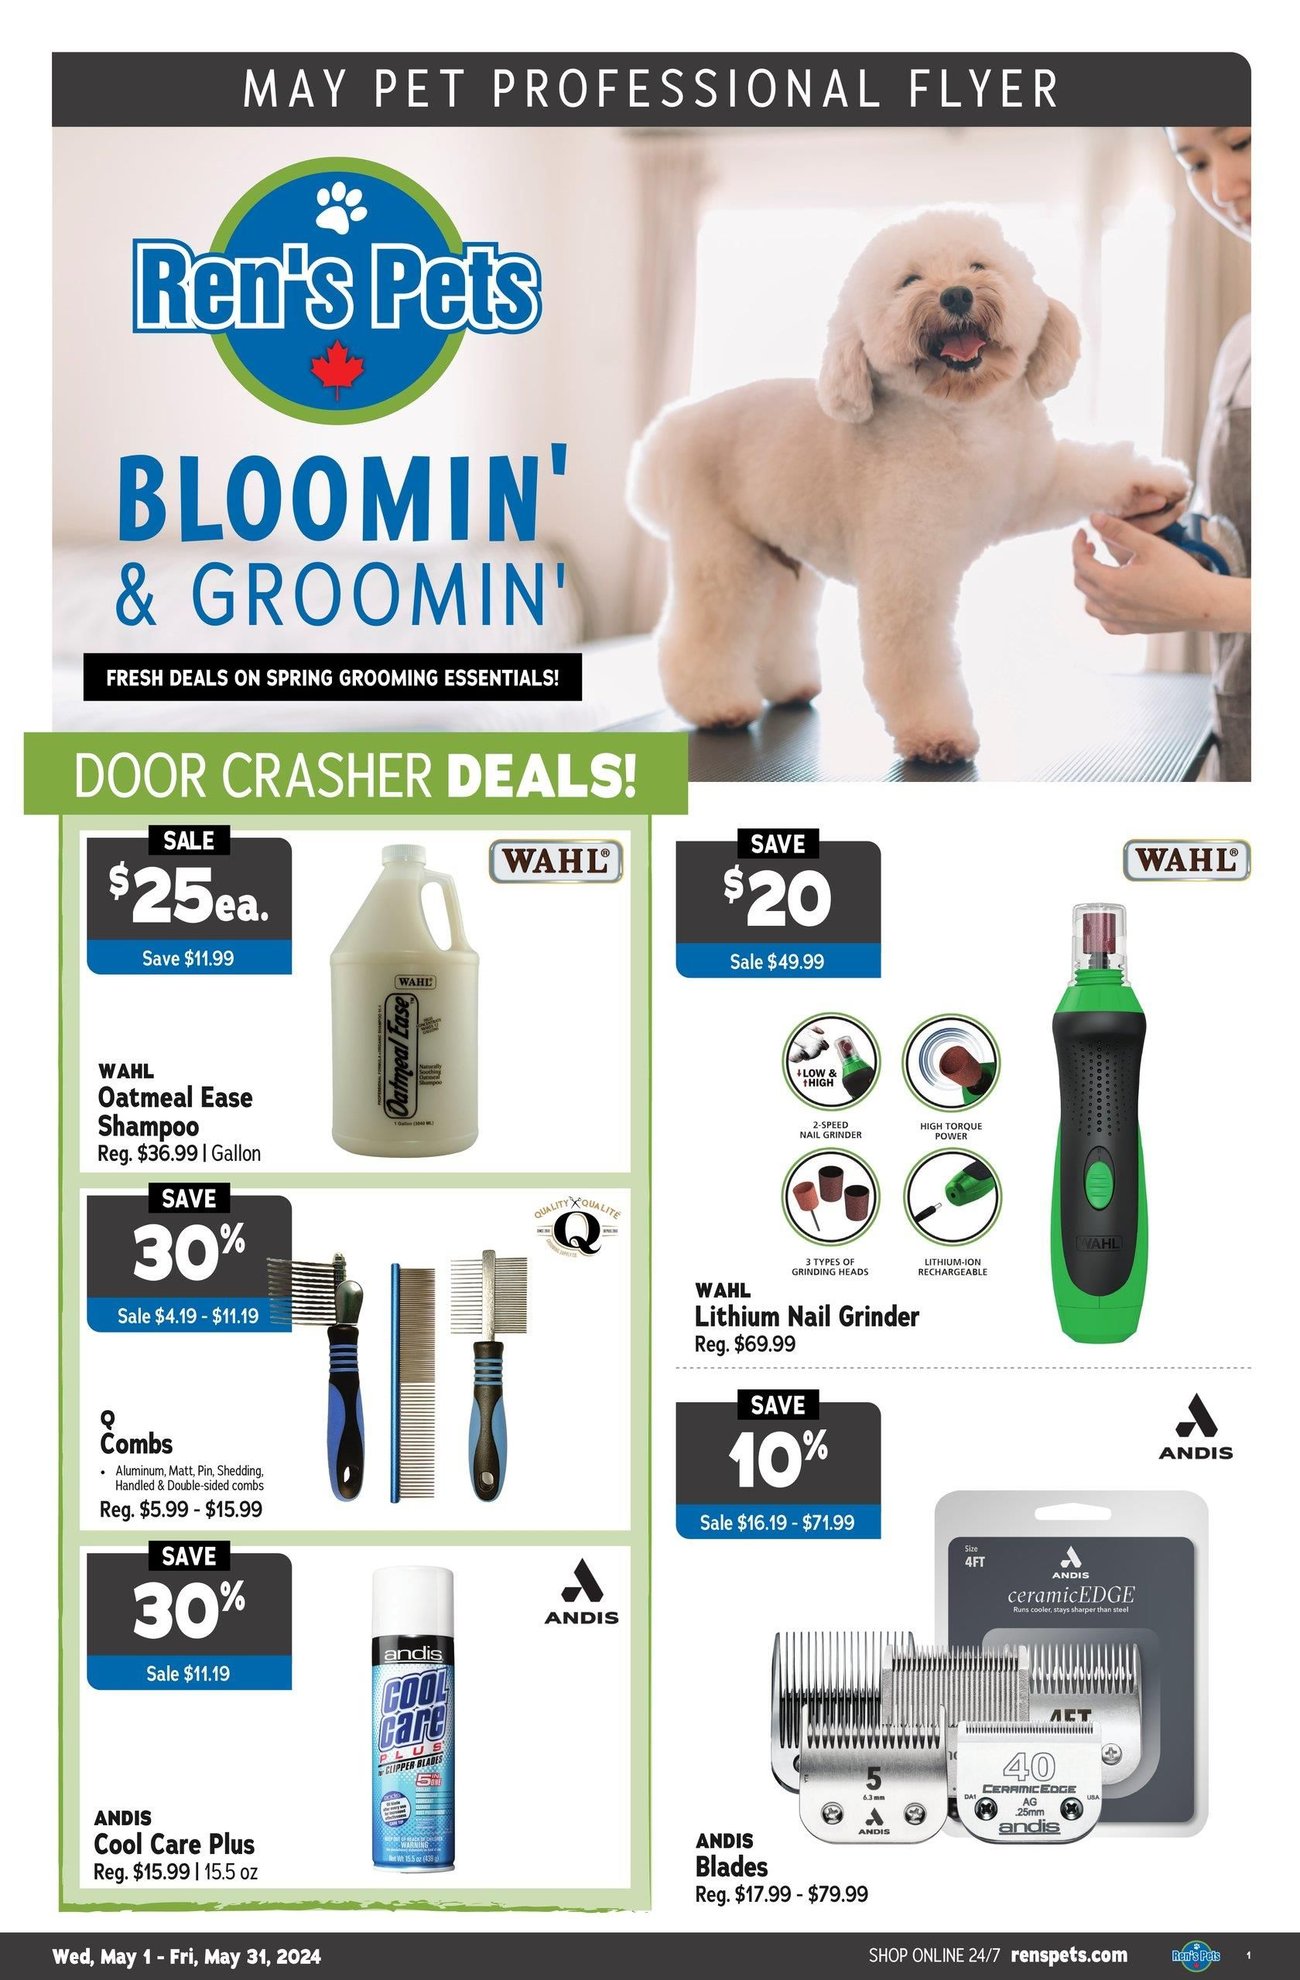 Ren's Pets - Grooming Monthly Savings - Page 1